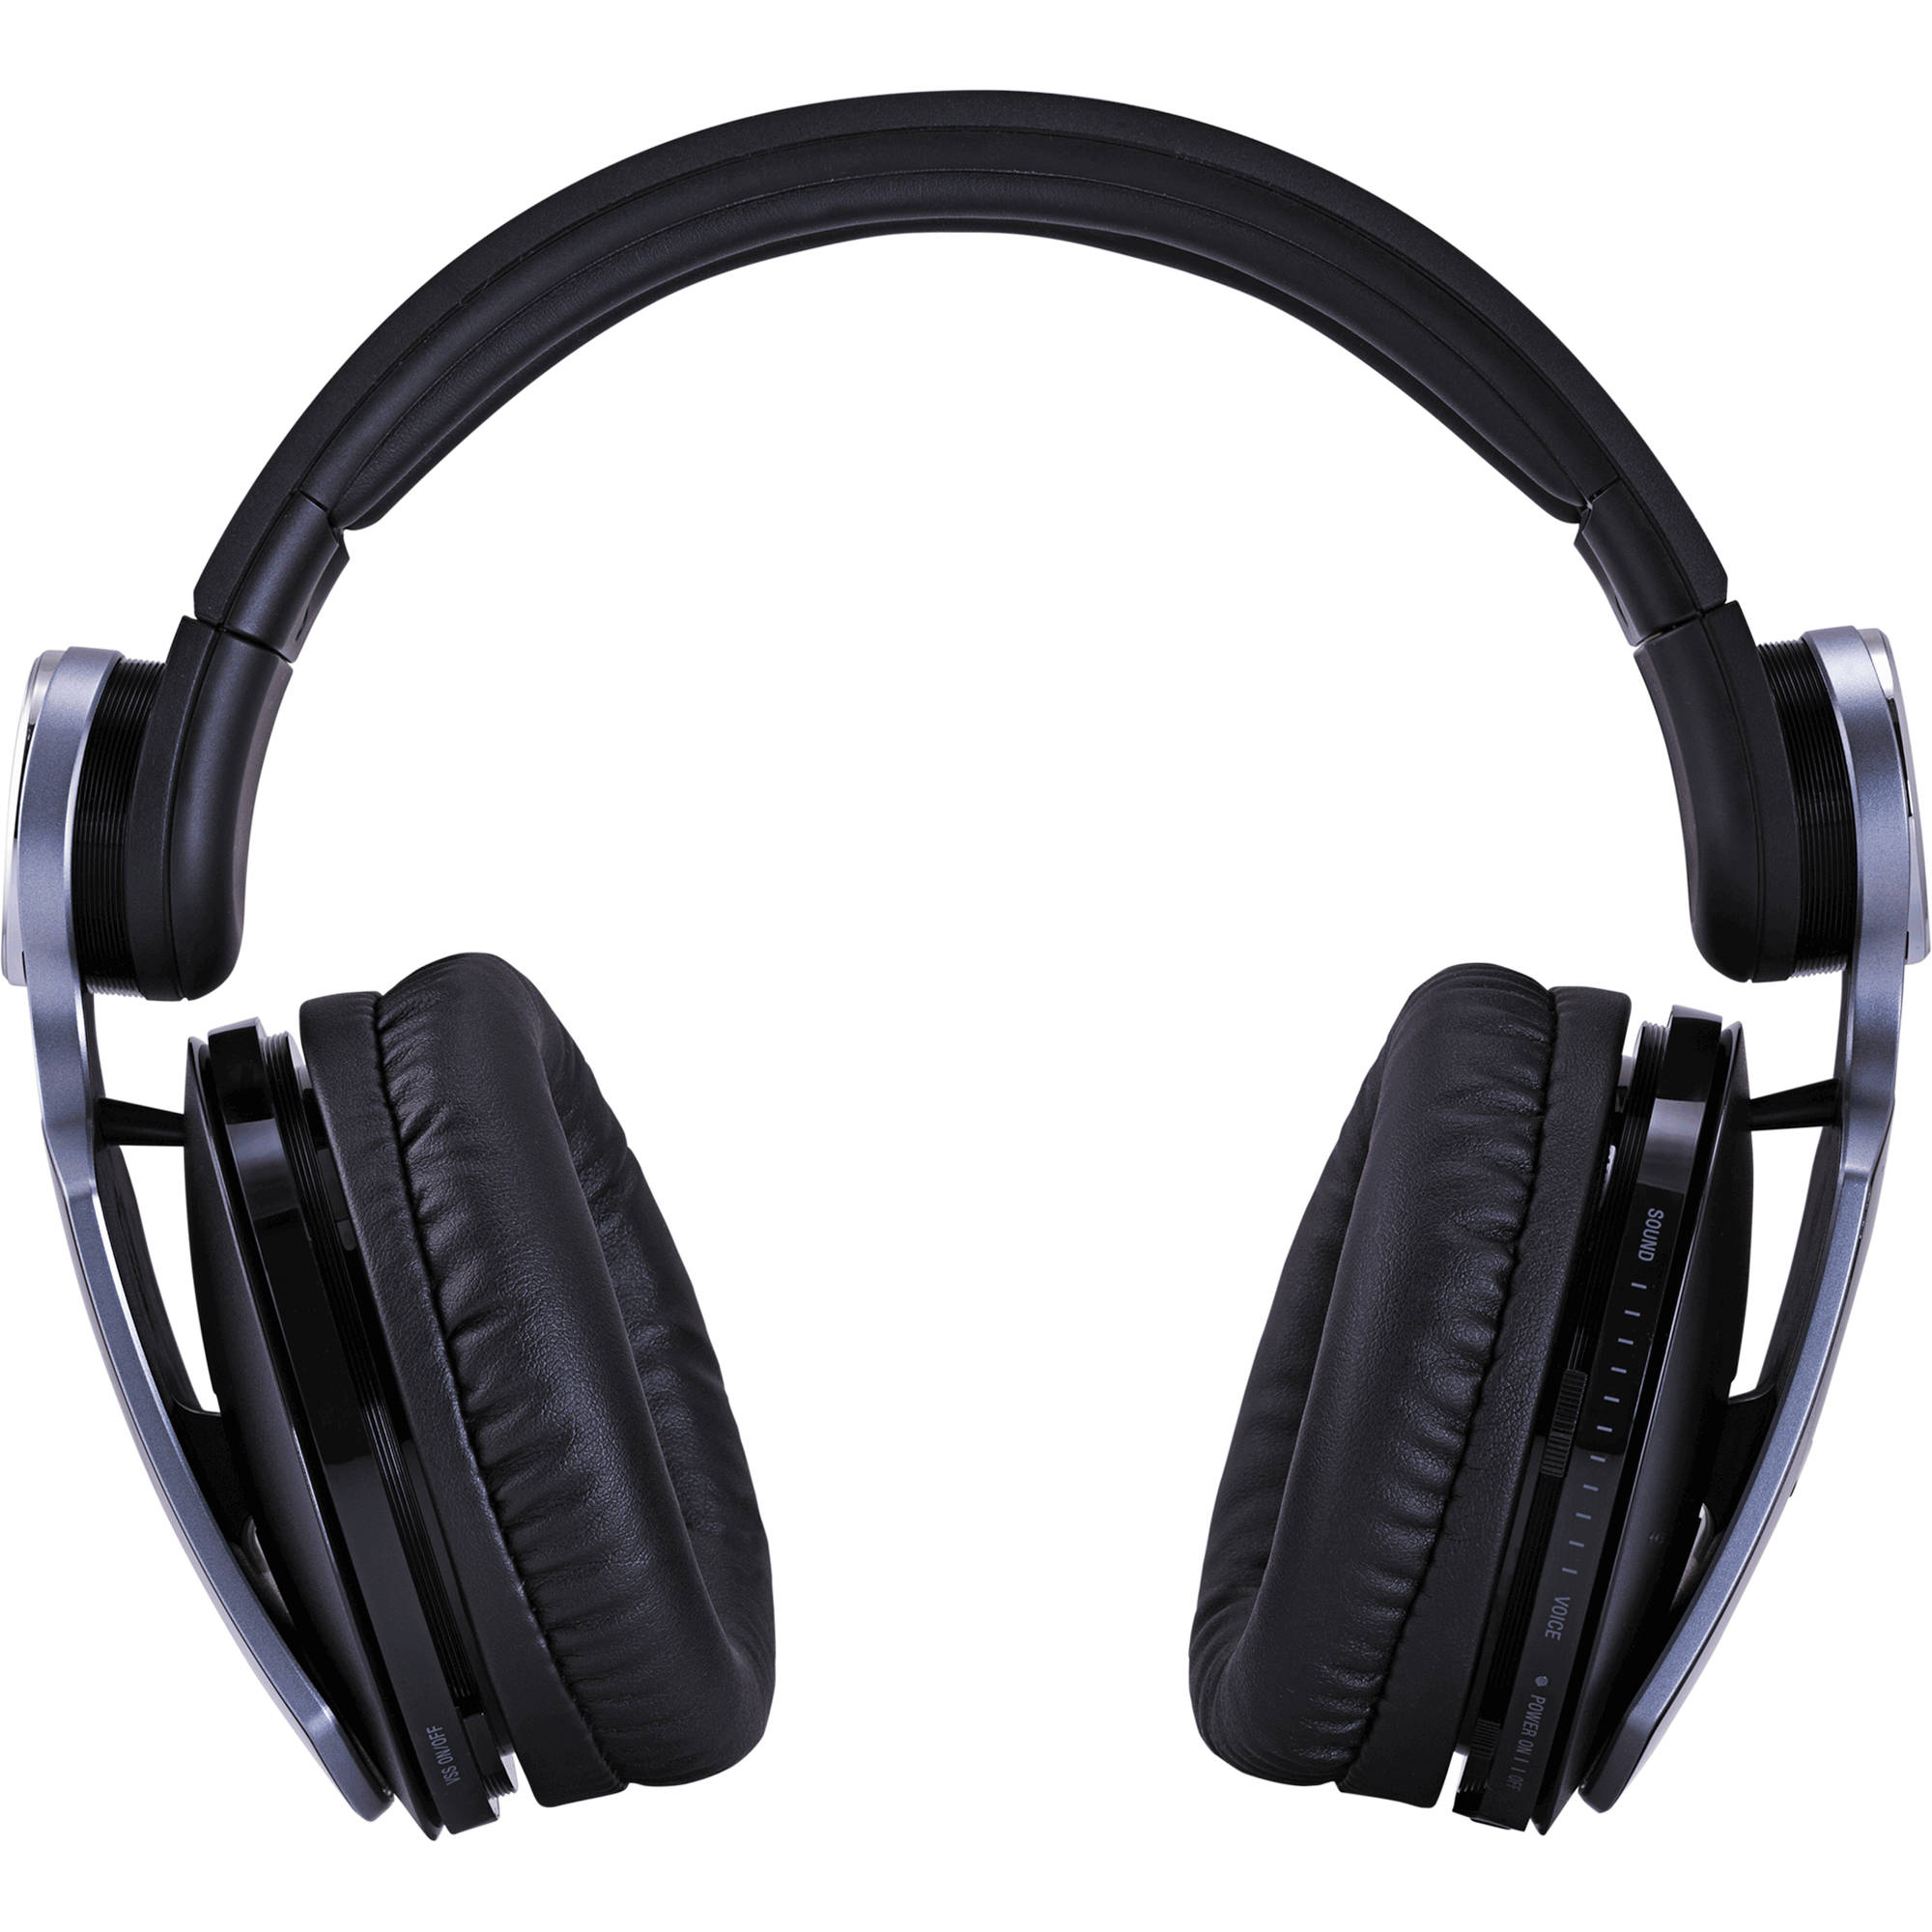 sony pulse wireless stereo headset elite edition